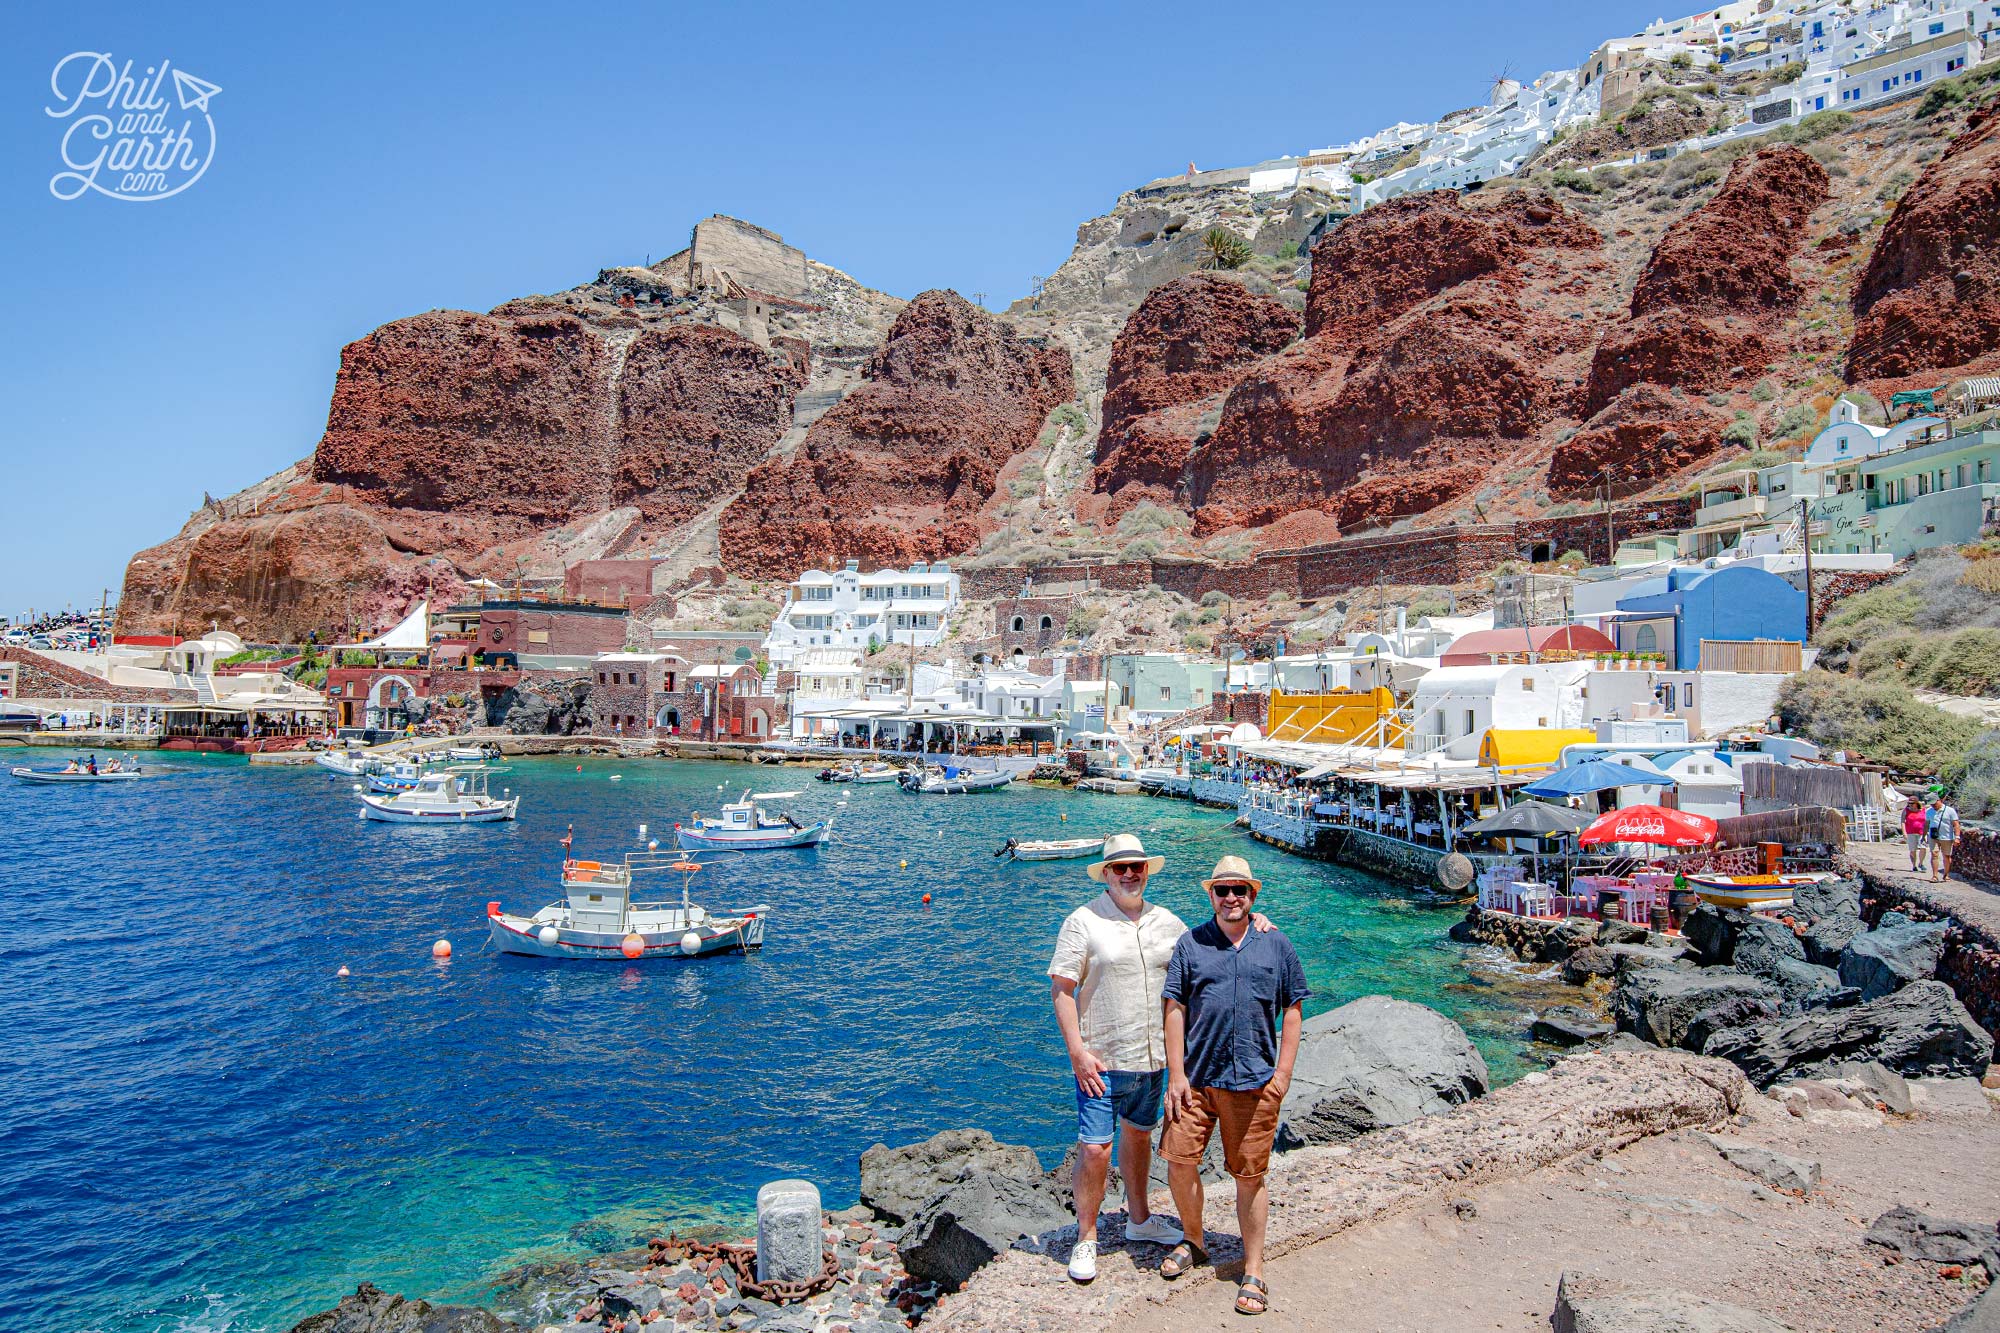 Santorini Instagram Spots: Ammoudi Bay's cliffs and boats bask in the warm sunshine